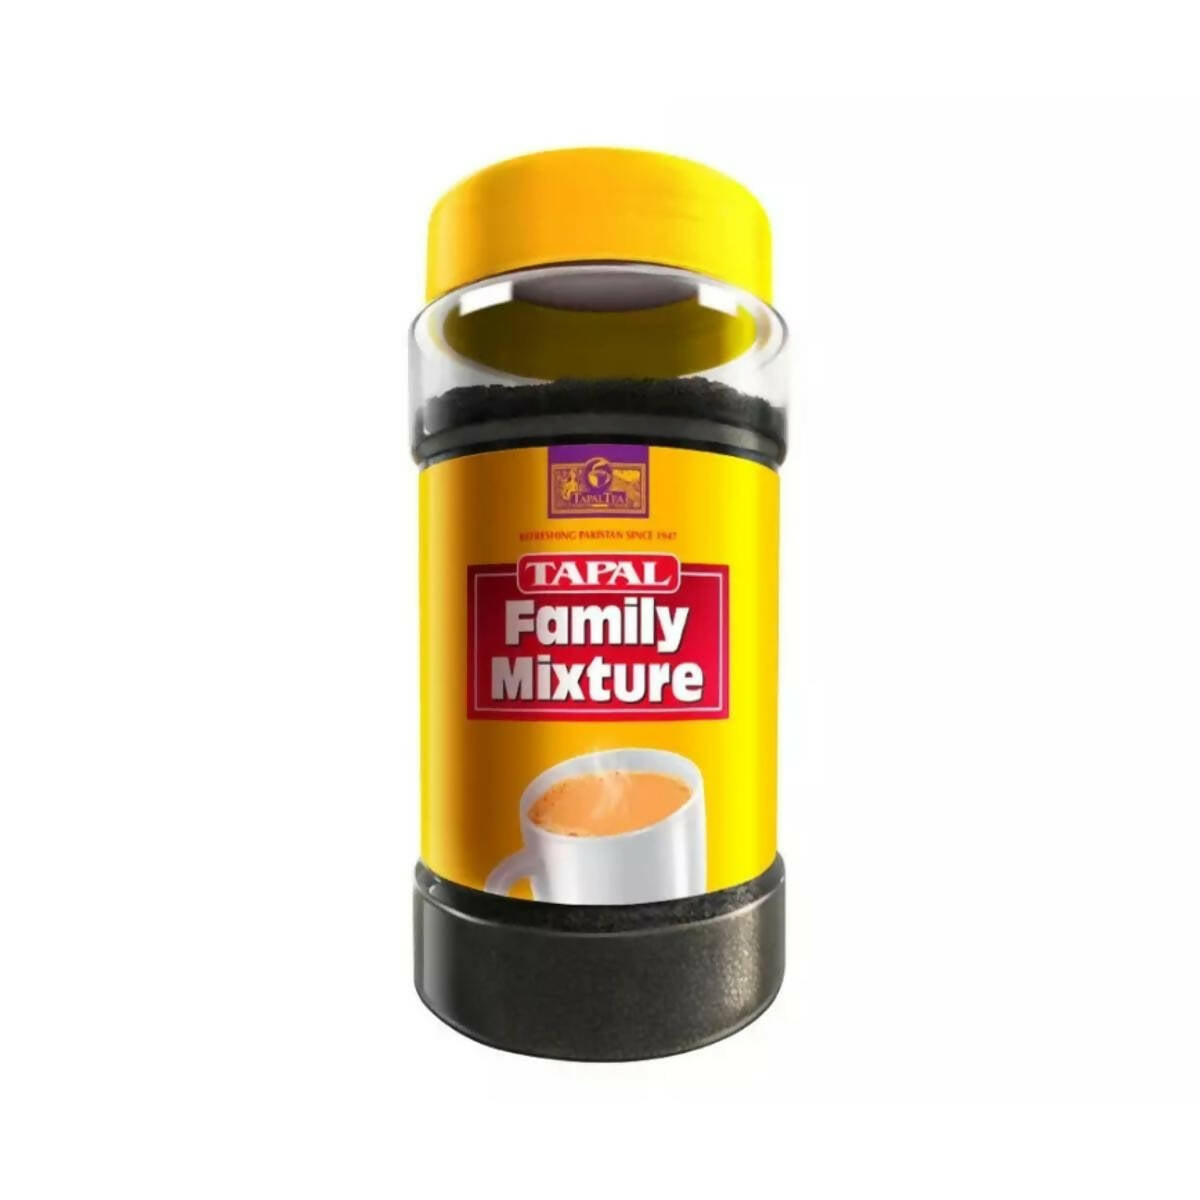 Tpl Family Mixture Tea 450 gm Jar 1 Pcs